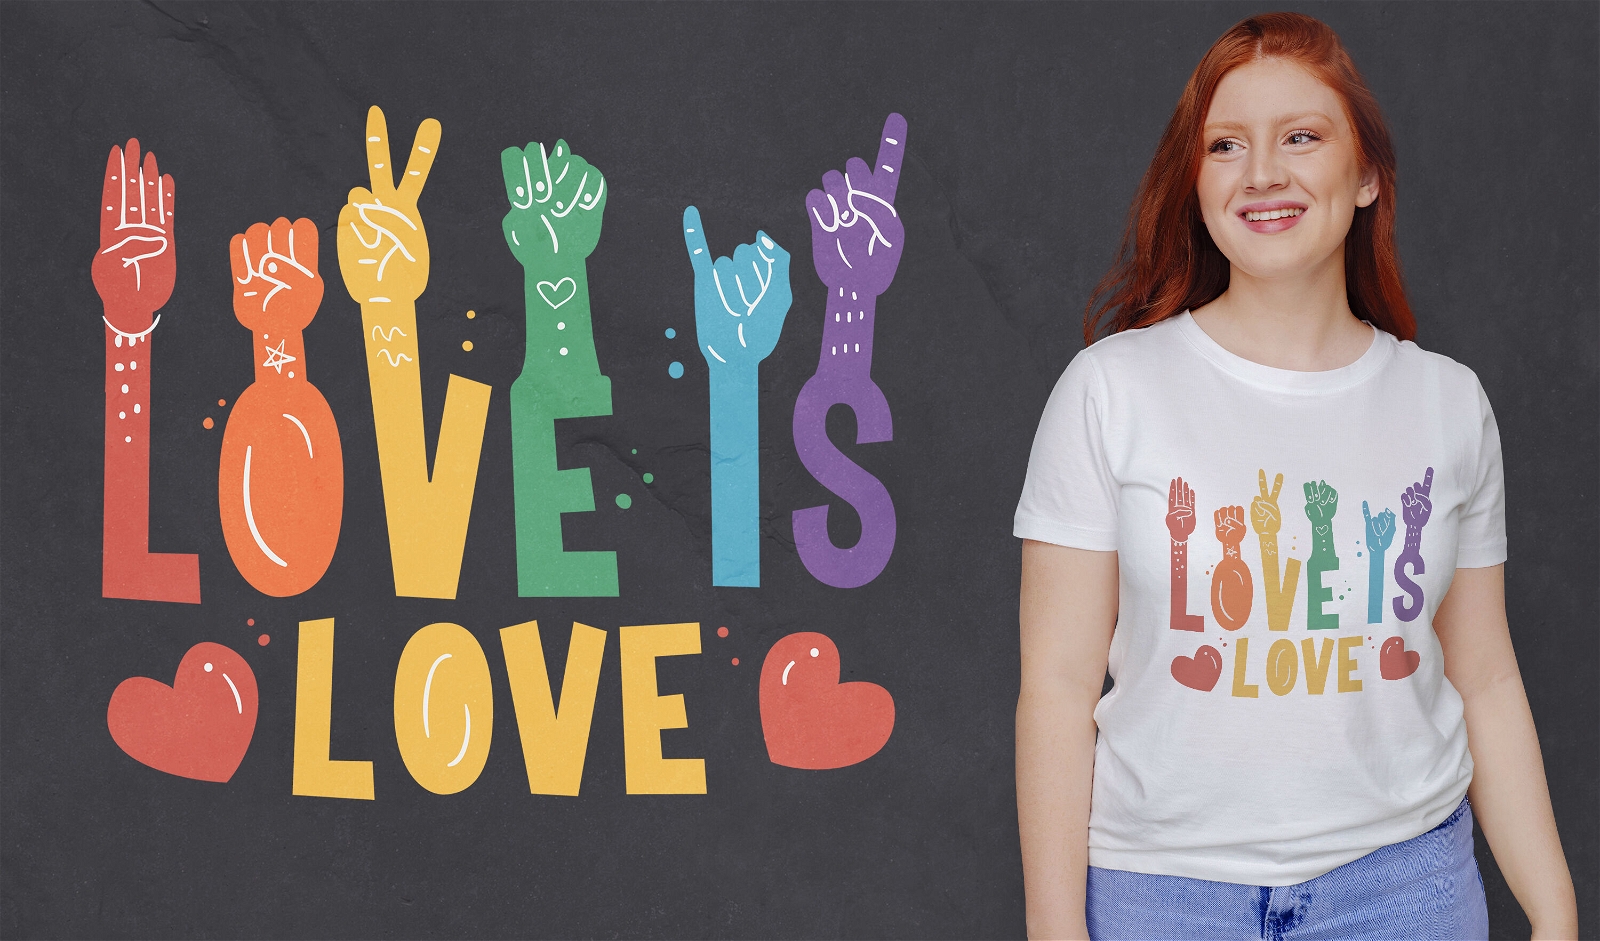 Love is love sign language t-shirt design